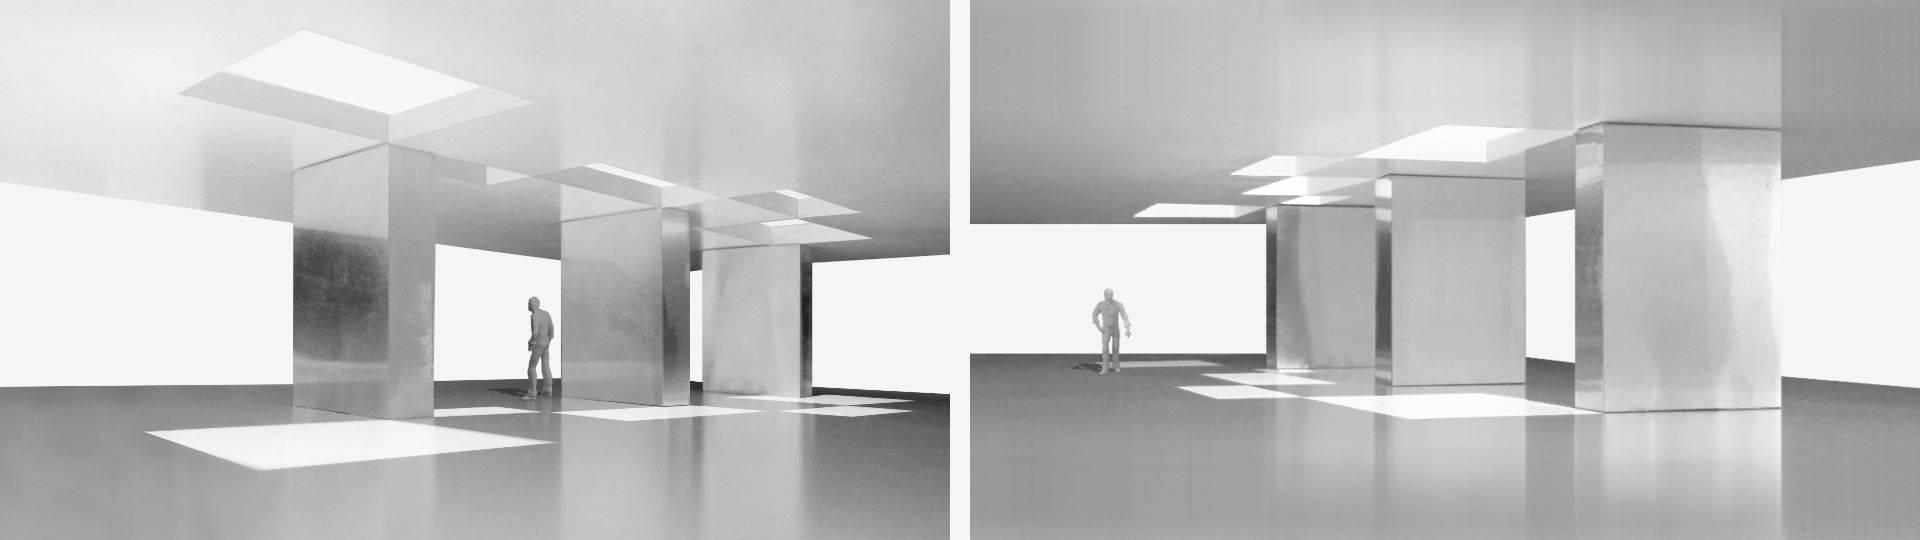 Concept Model - Gallardo Llopis Architects